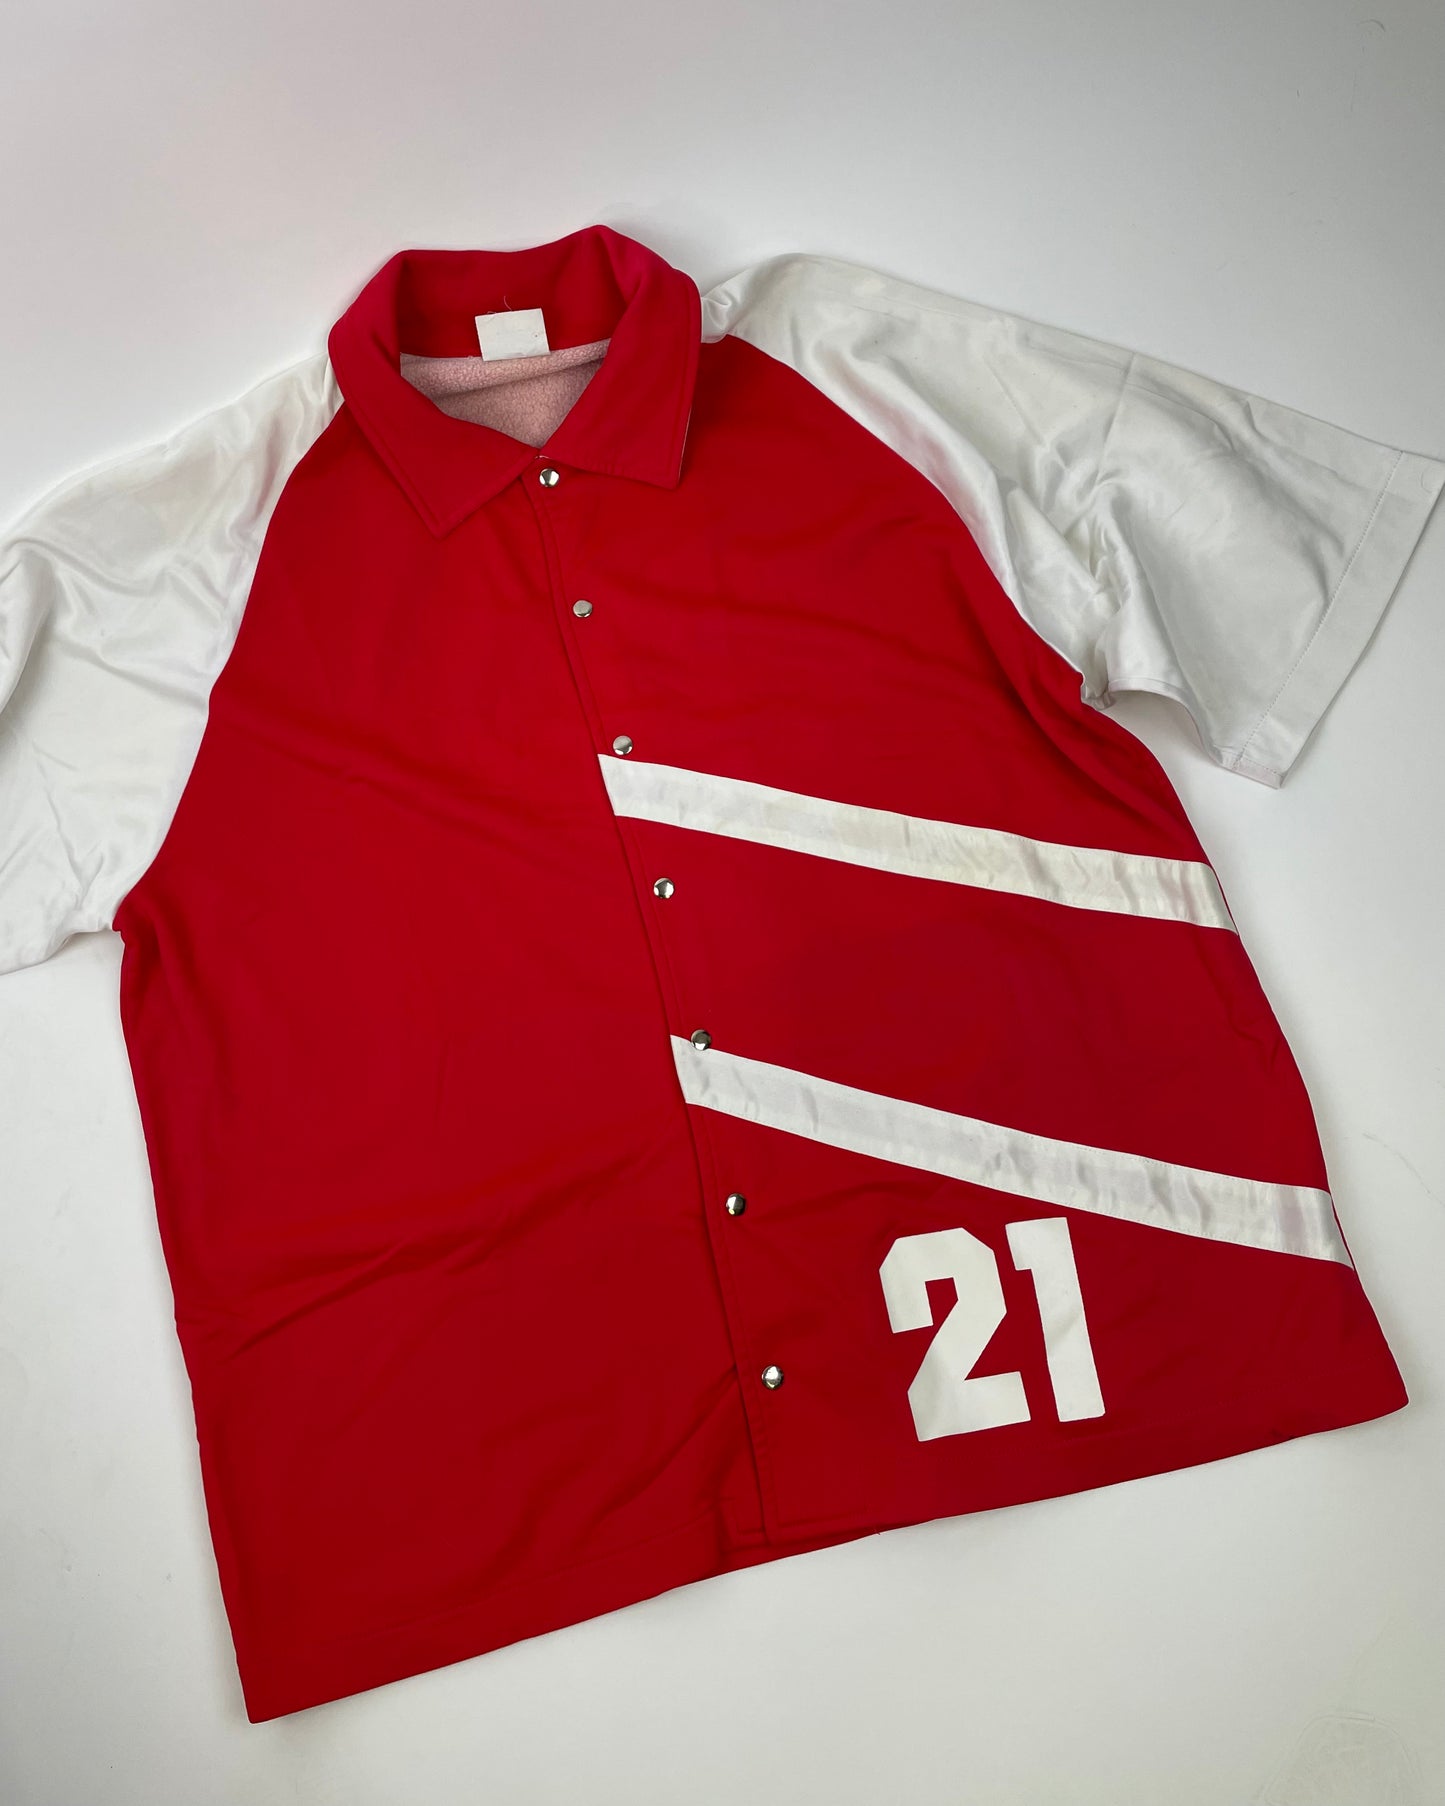 Jacket LDS Softball 1990s